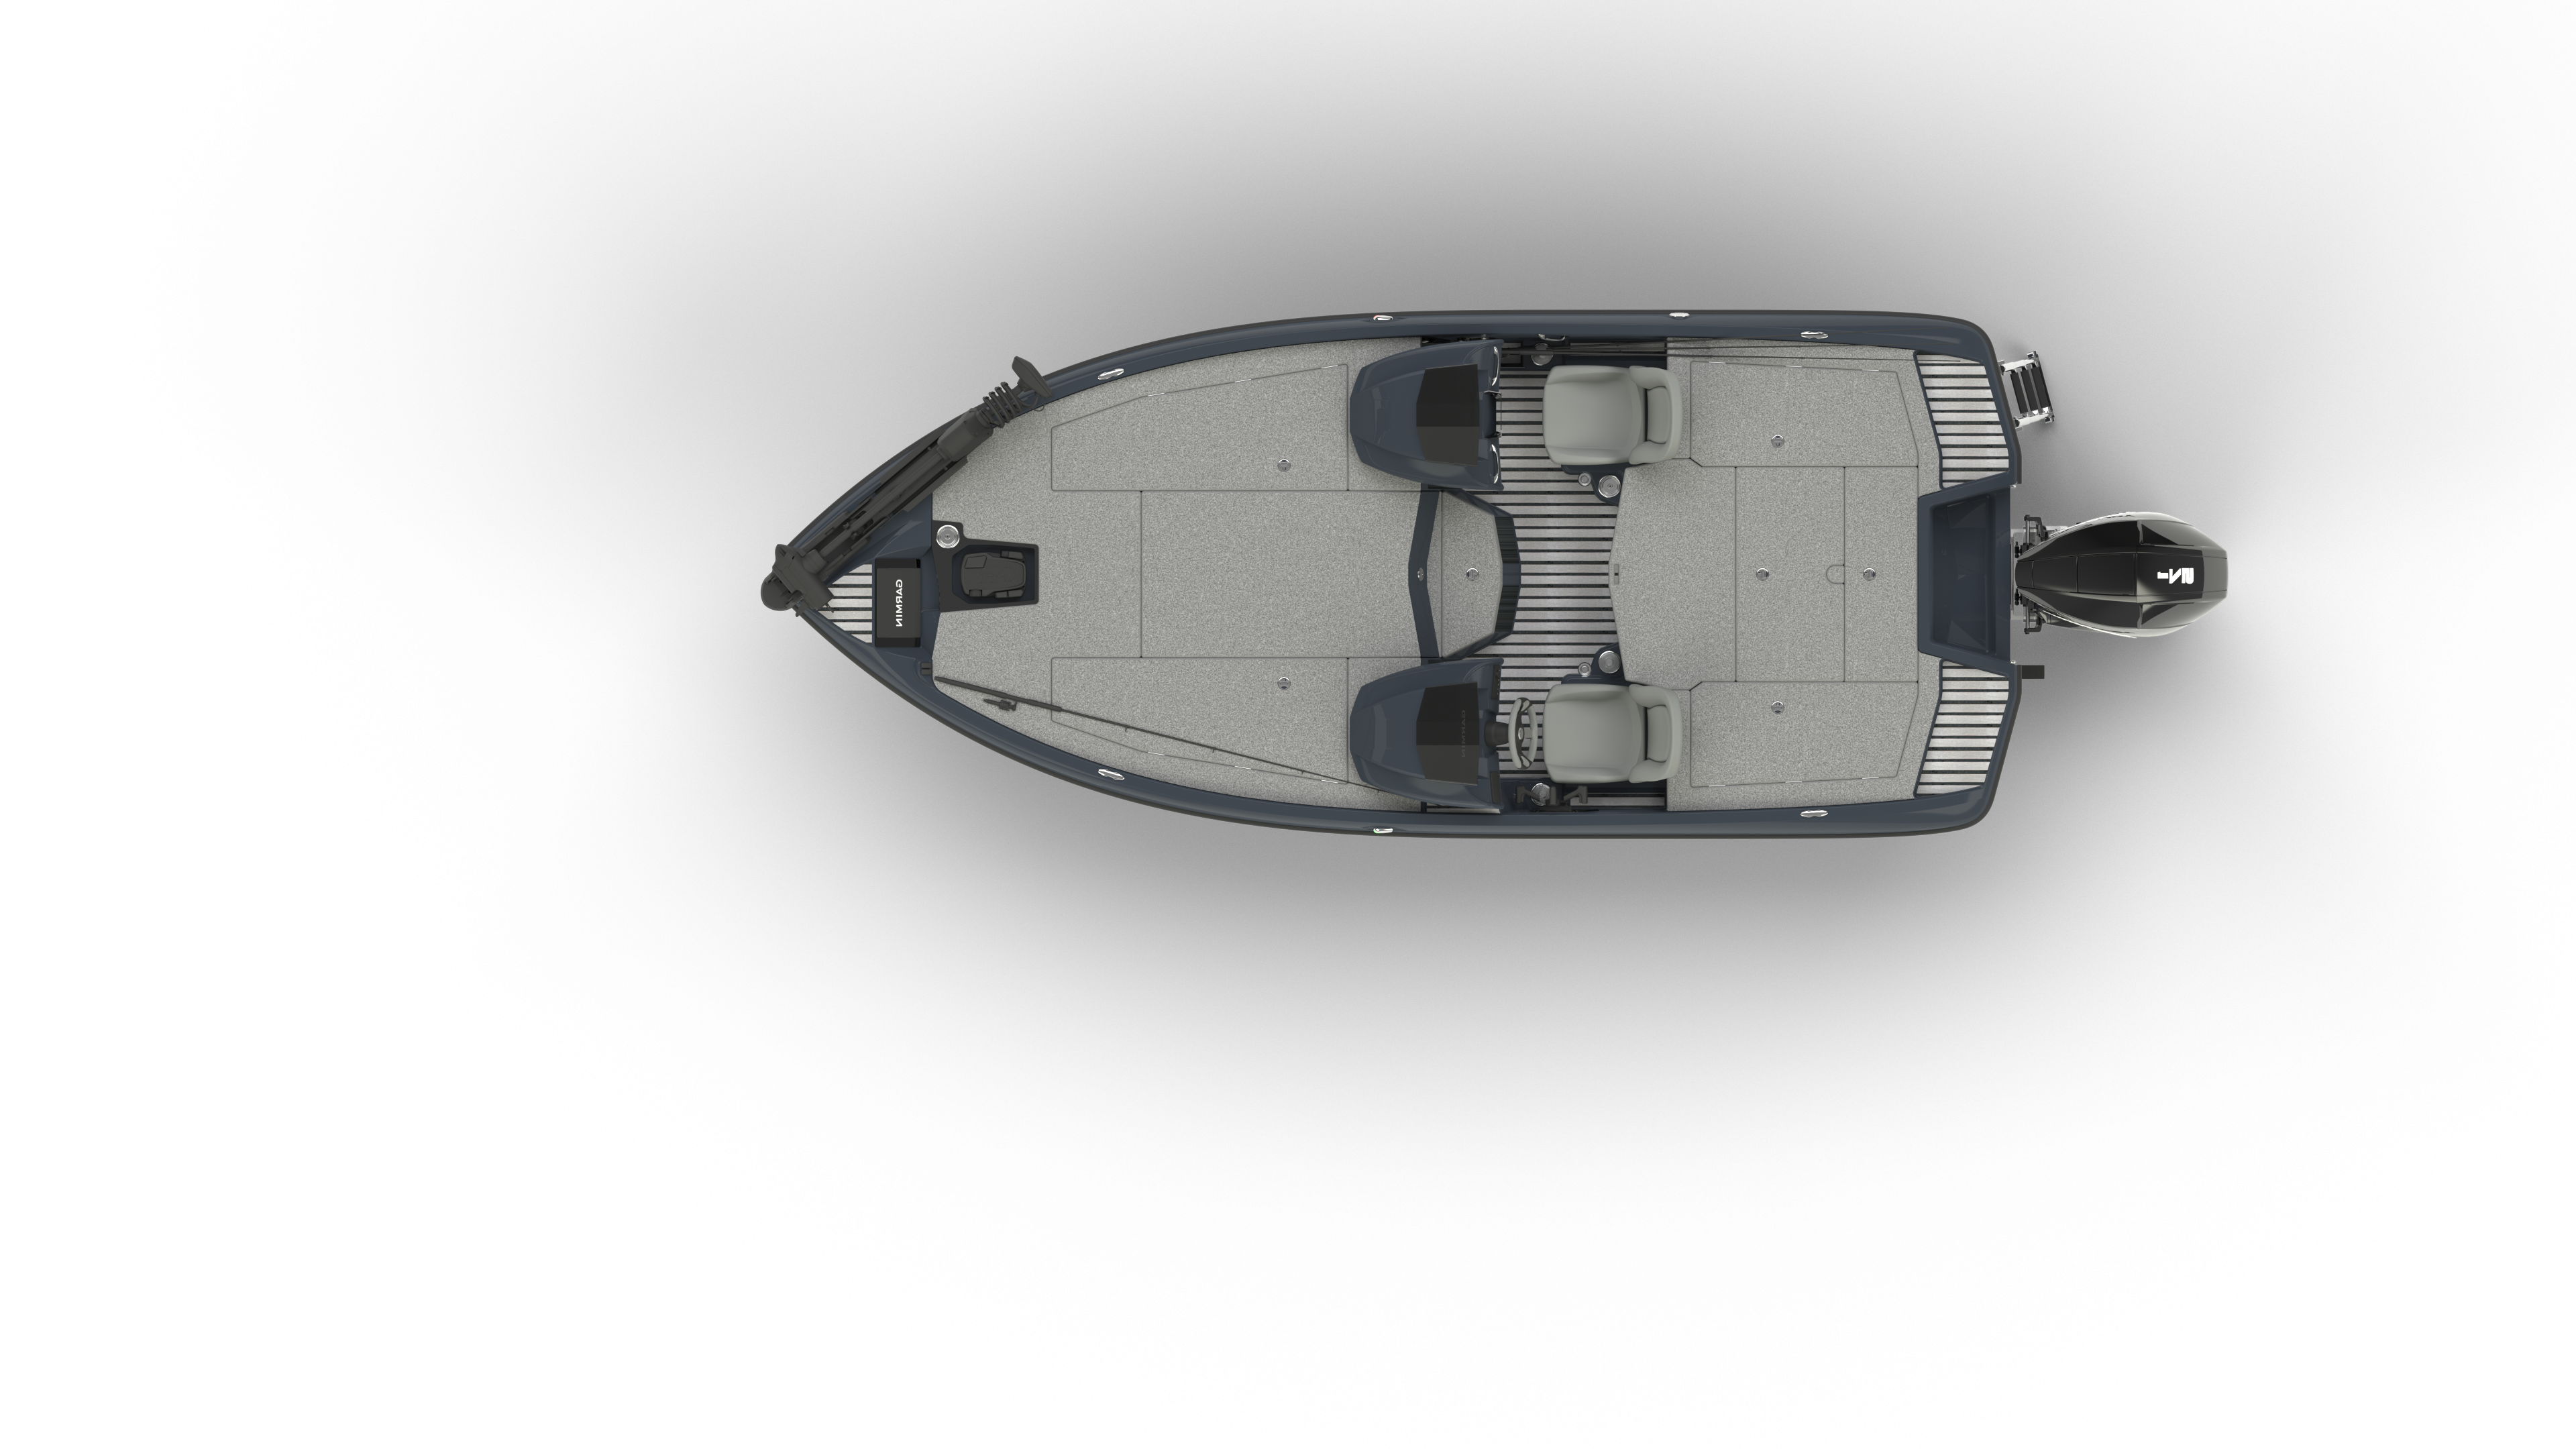 BASSBOAT SB Yacht Design